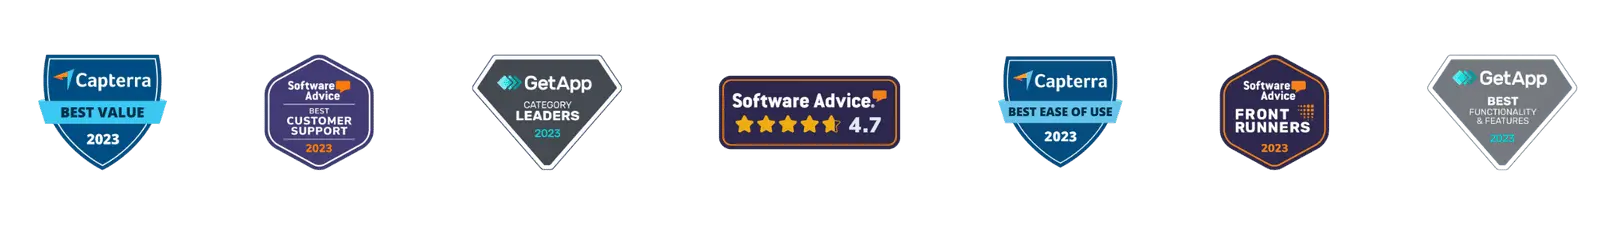 gartner software advice trust badges